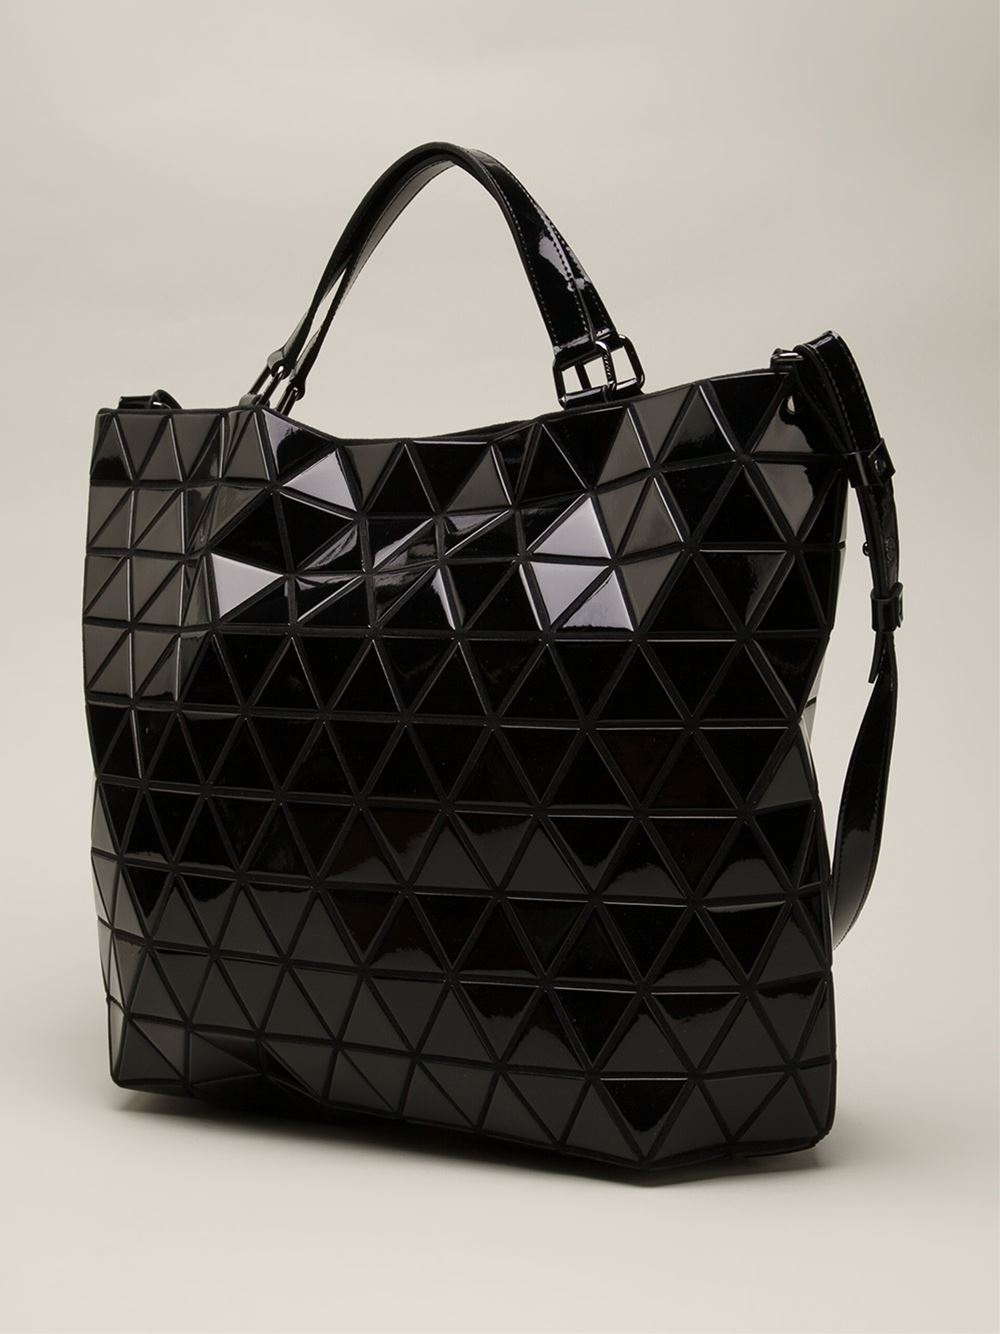 Lyst - Bao Bao Issey Miyake Geometric Cross Body Bag in Black